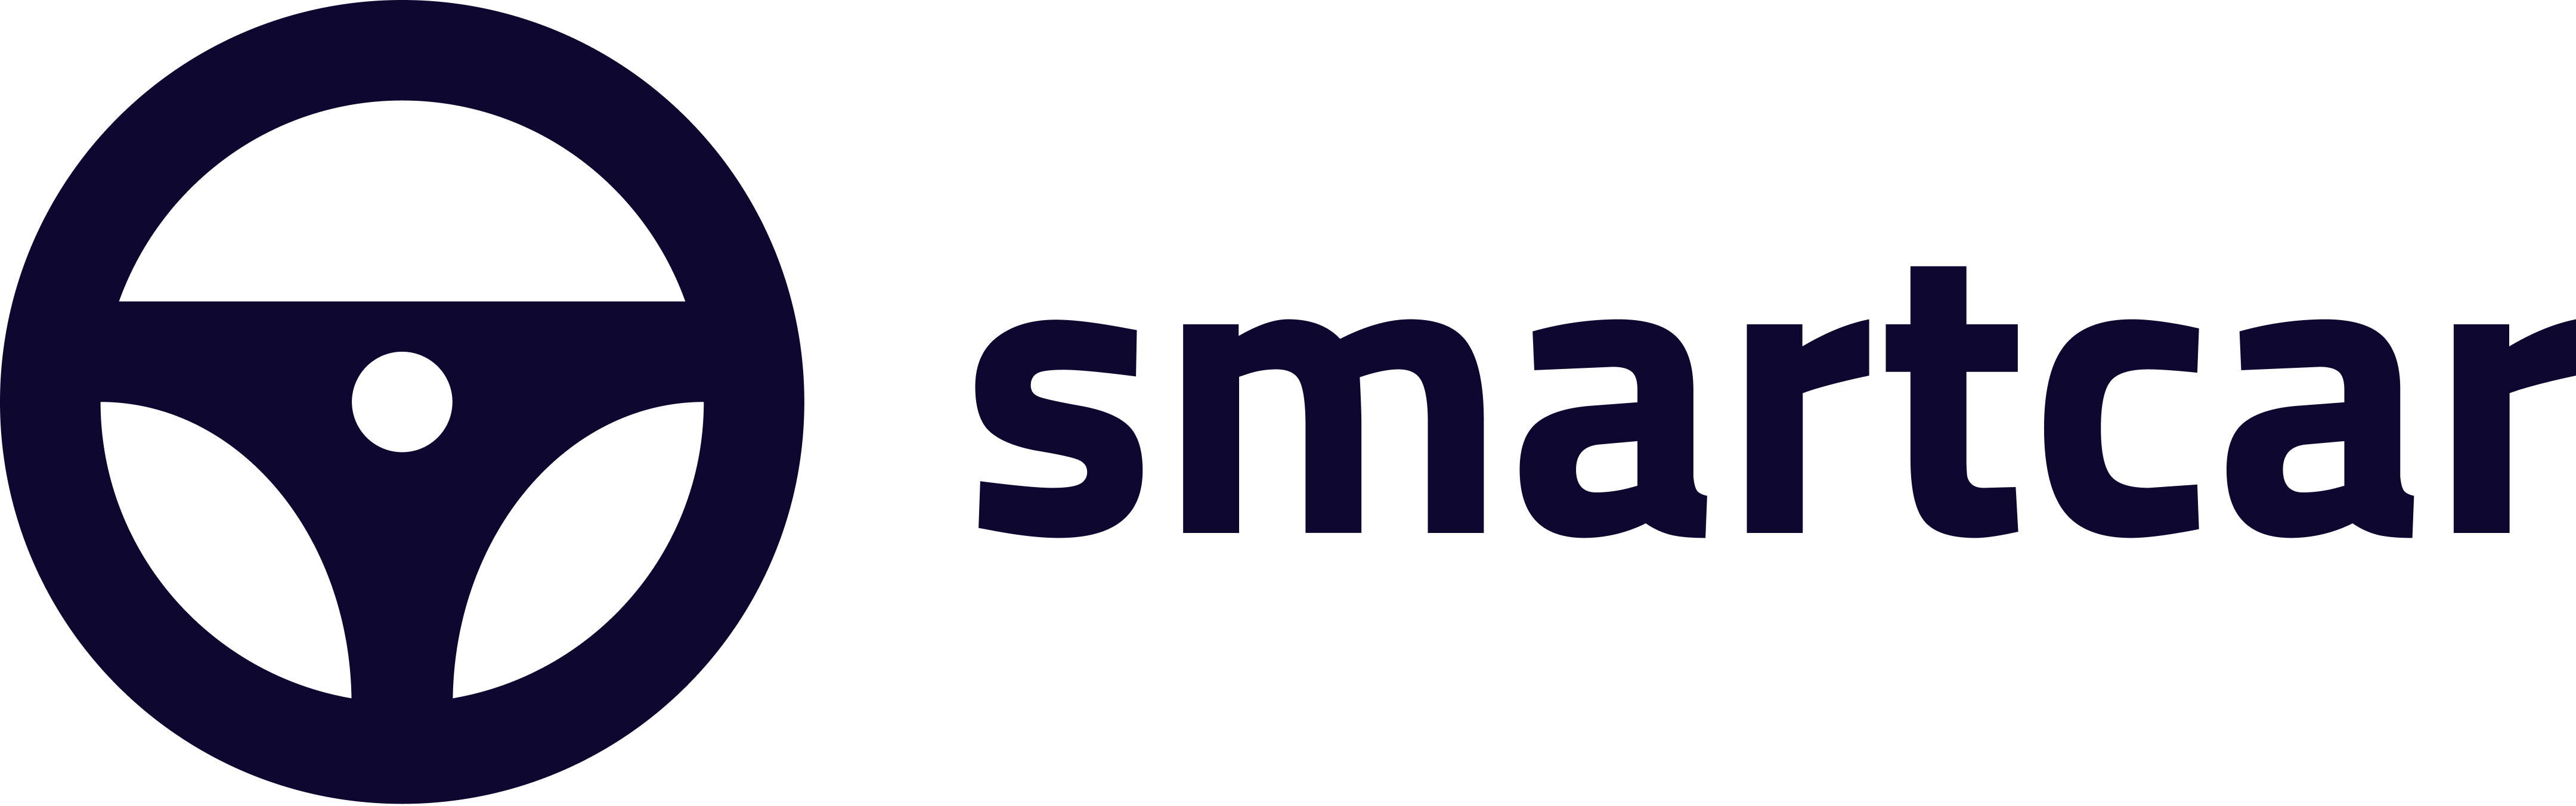 Smart Car Logo - Smartcar - Product Designer